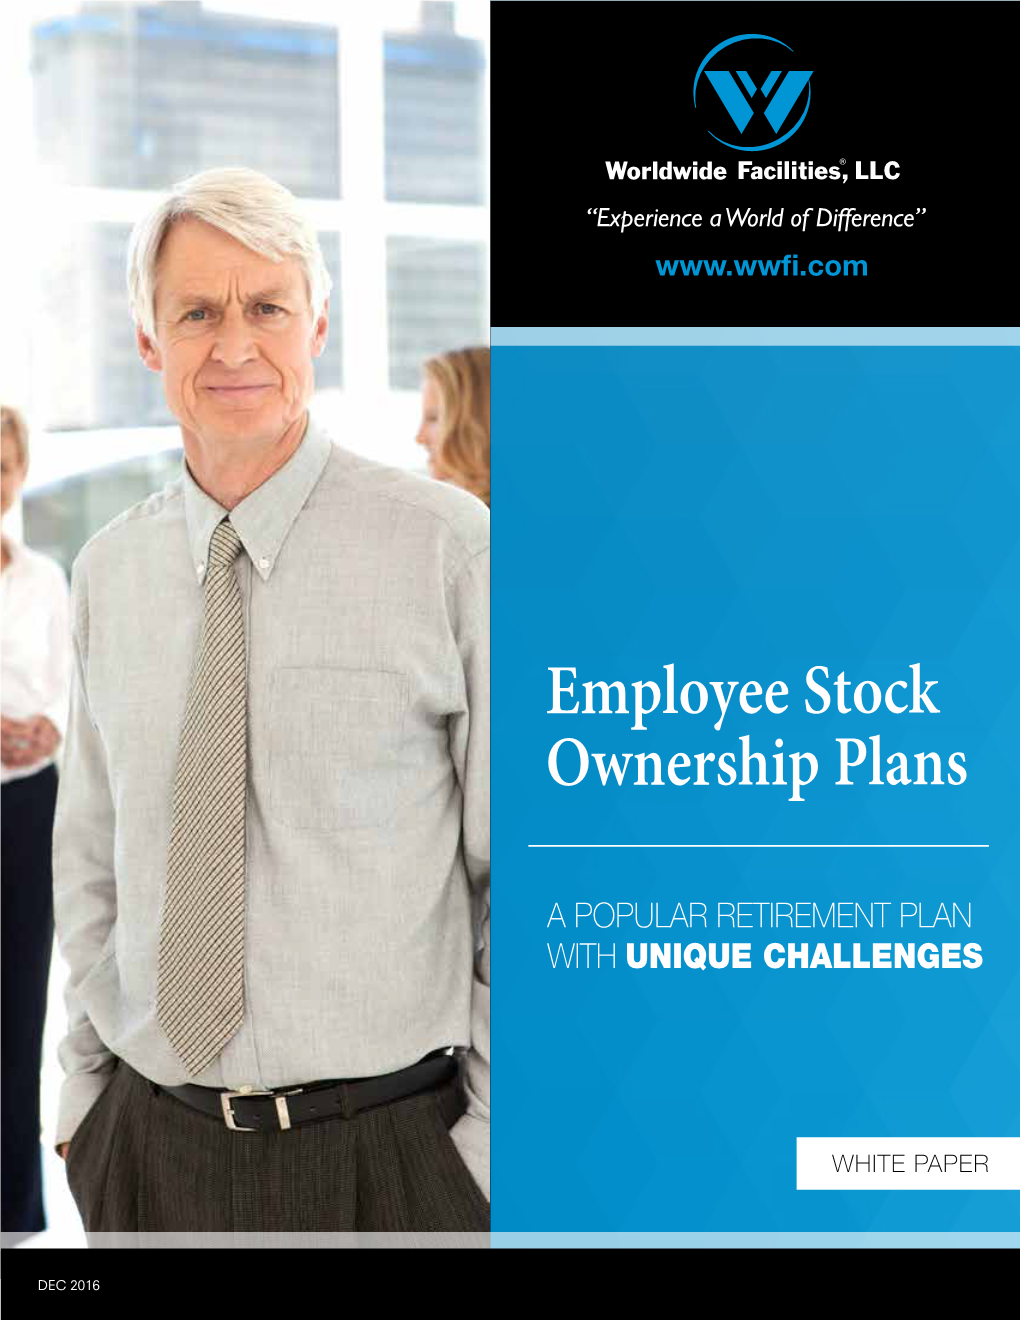 Employee Stock Ownership Plans